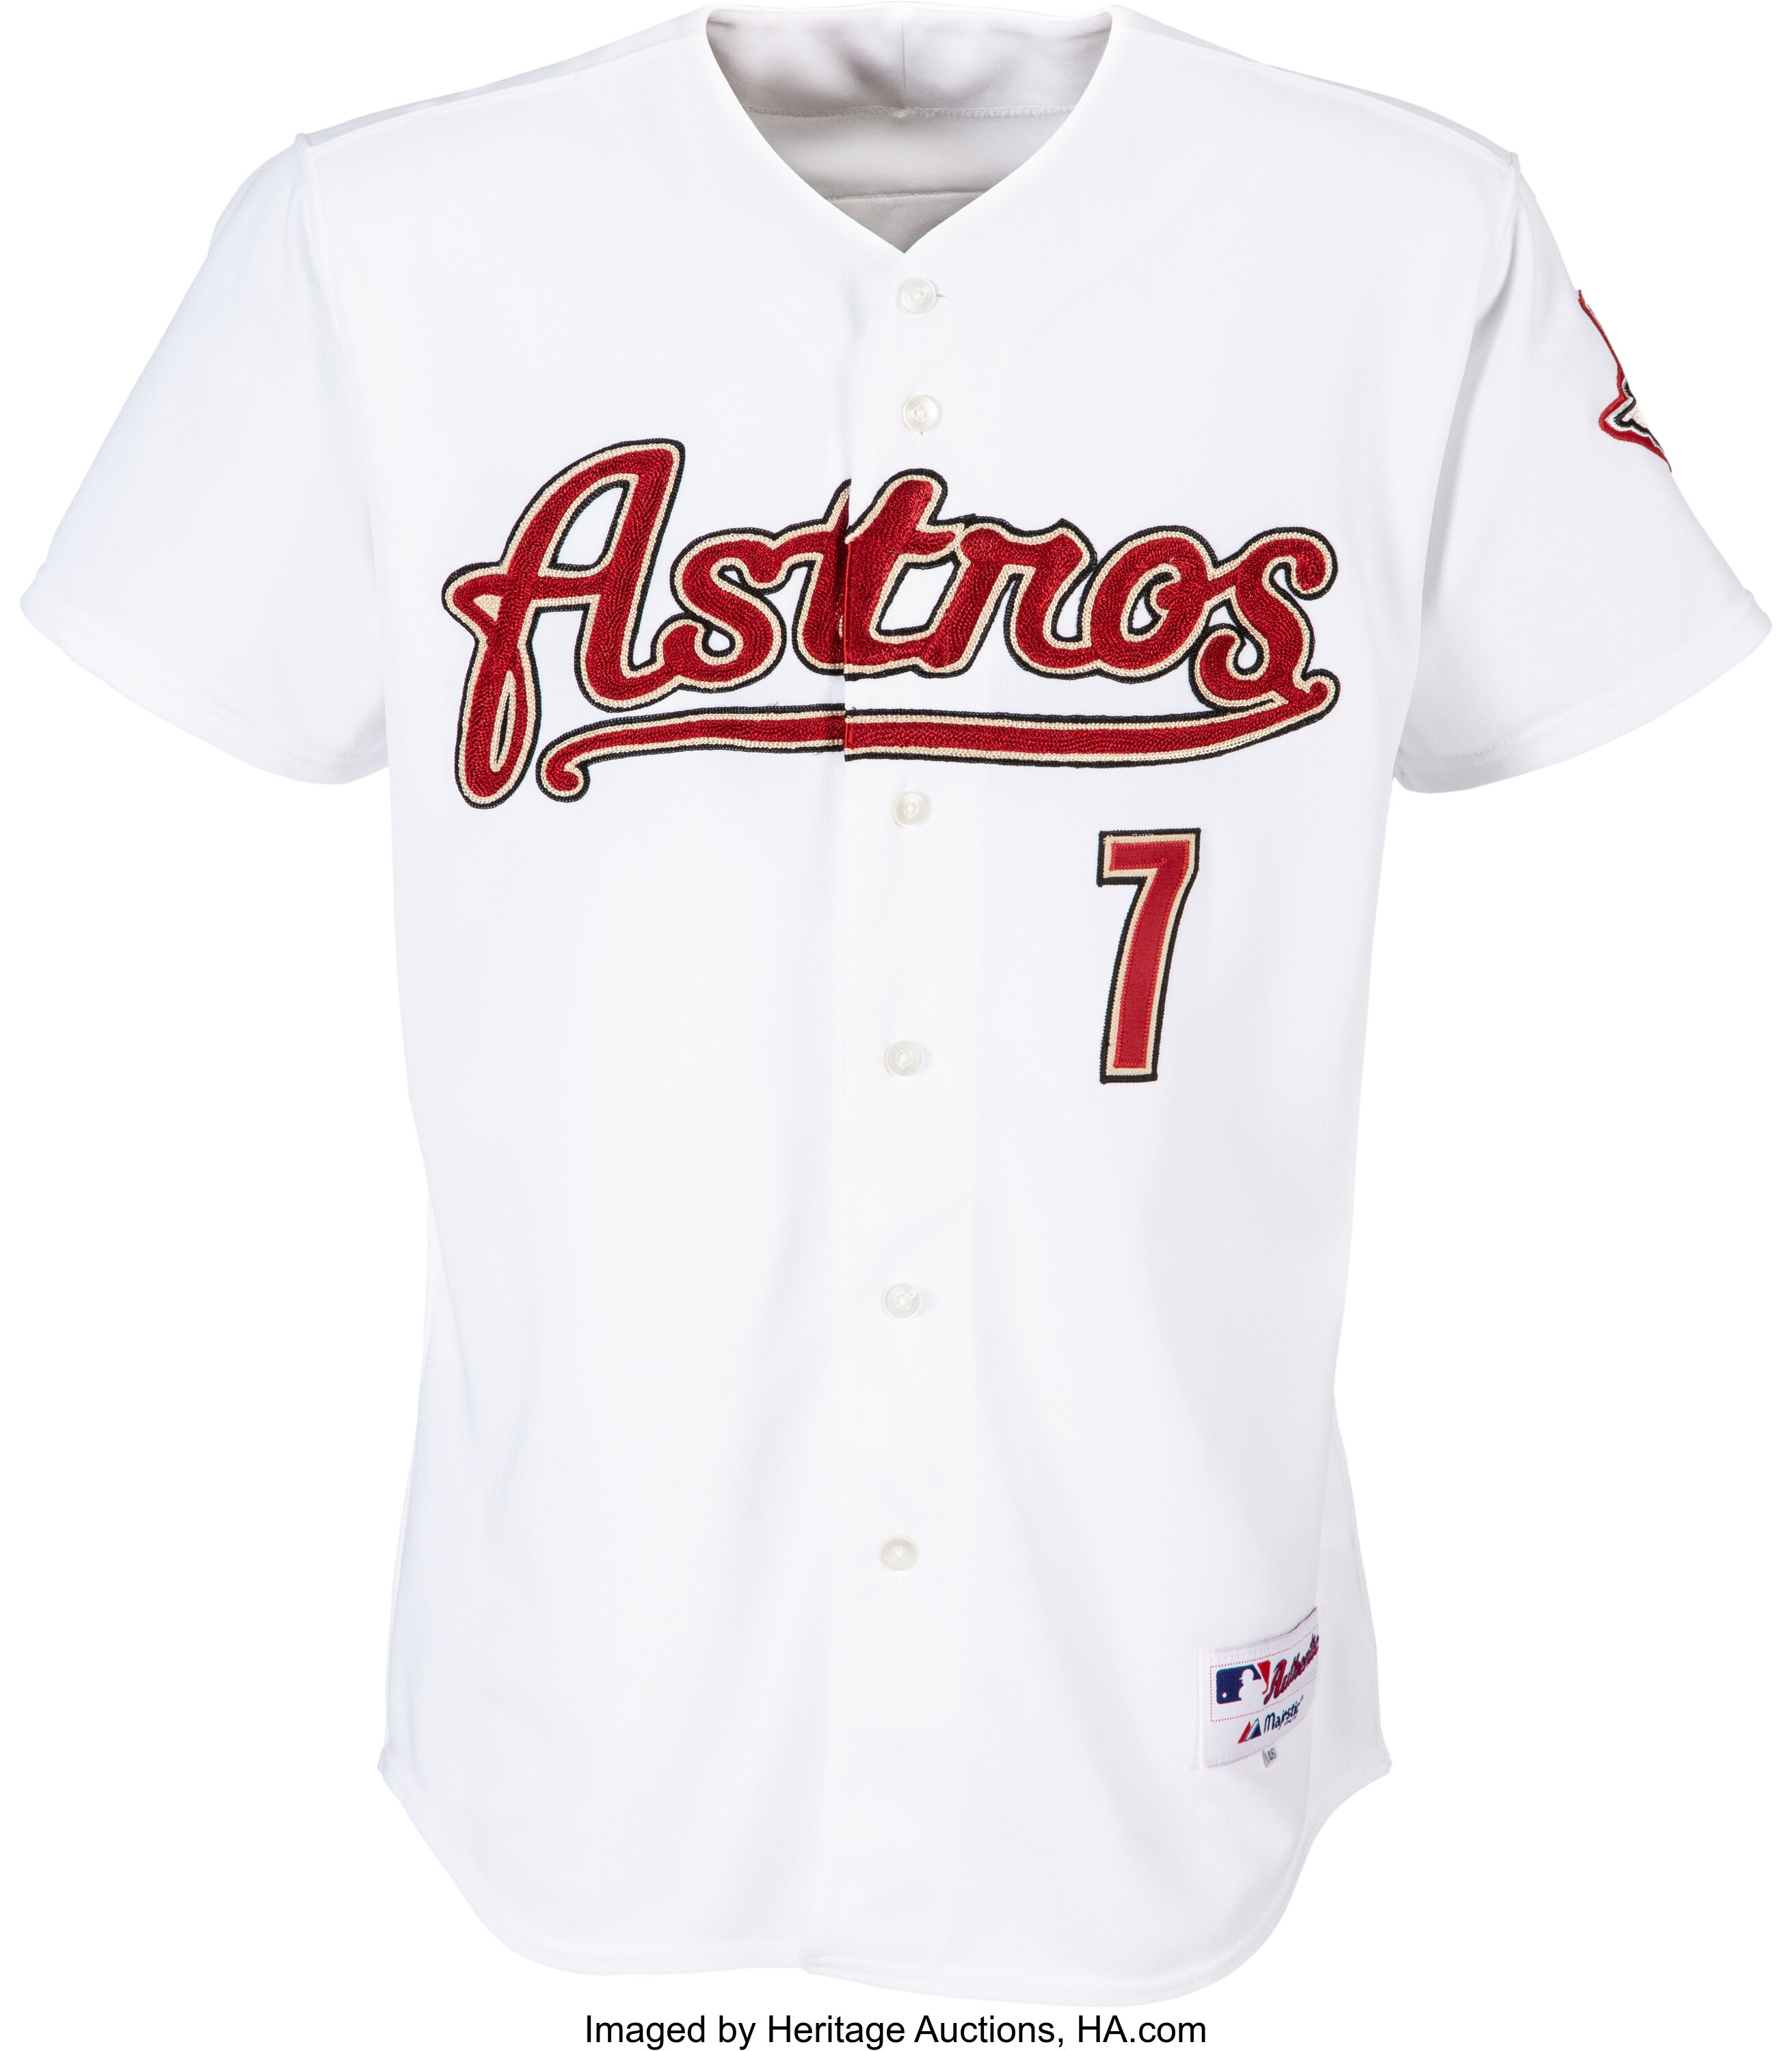 2005 Craig Biggio Game Worn Houston Astros Jersey. Baseball, Lot #81963